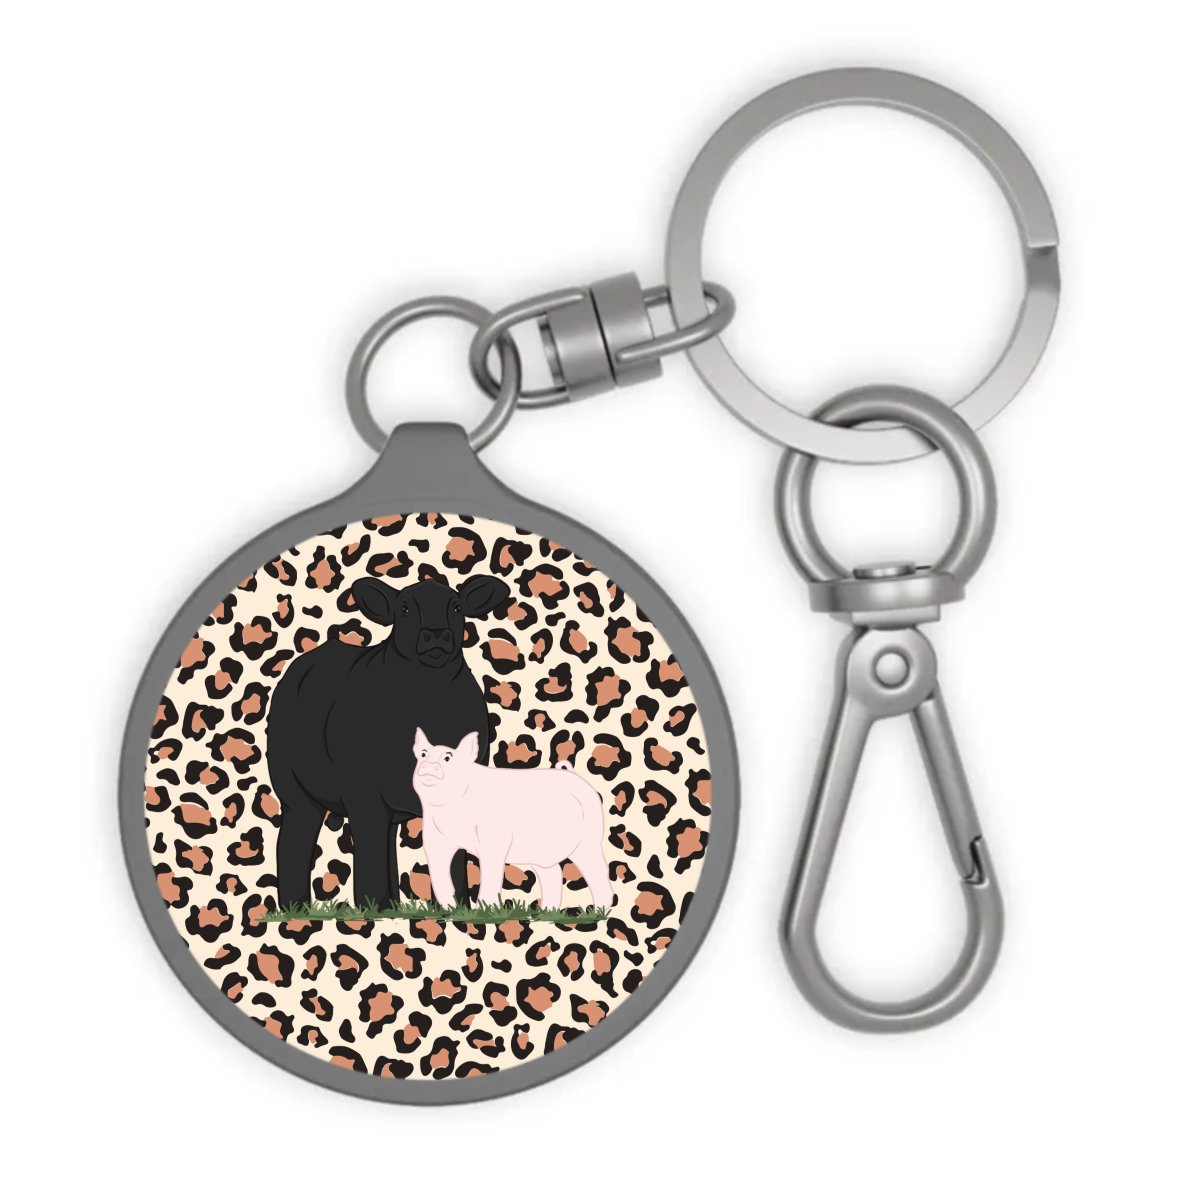 Personalized-Livestock-Key Chain Tag - Cheetah Design